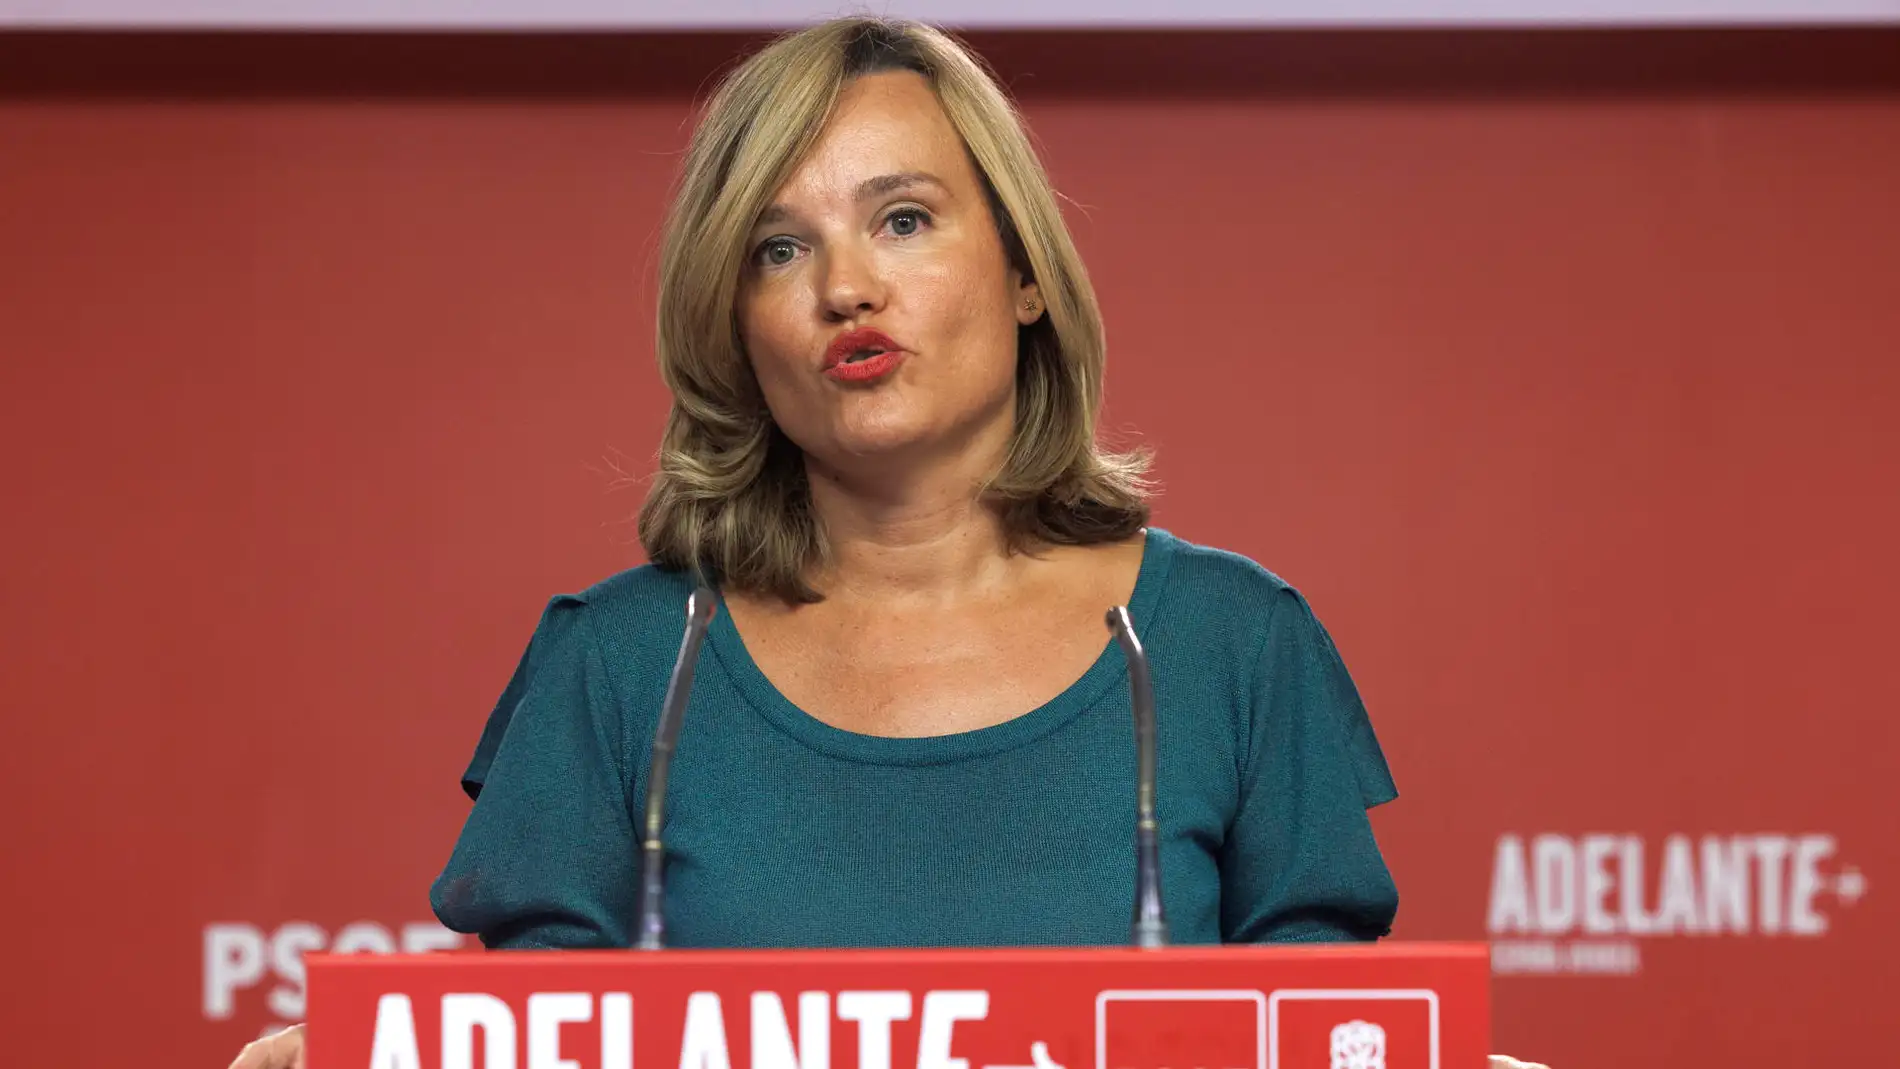 El PSOE rechaza a oferta de Feijóo: "Hemos pasado de querer derogar al sanchismo, a rogar al sanchismo"